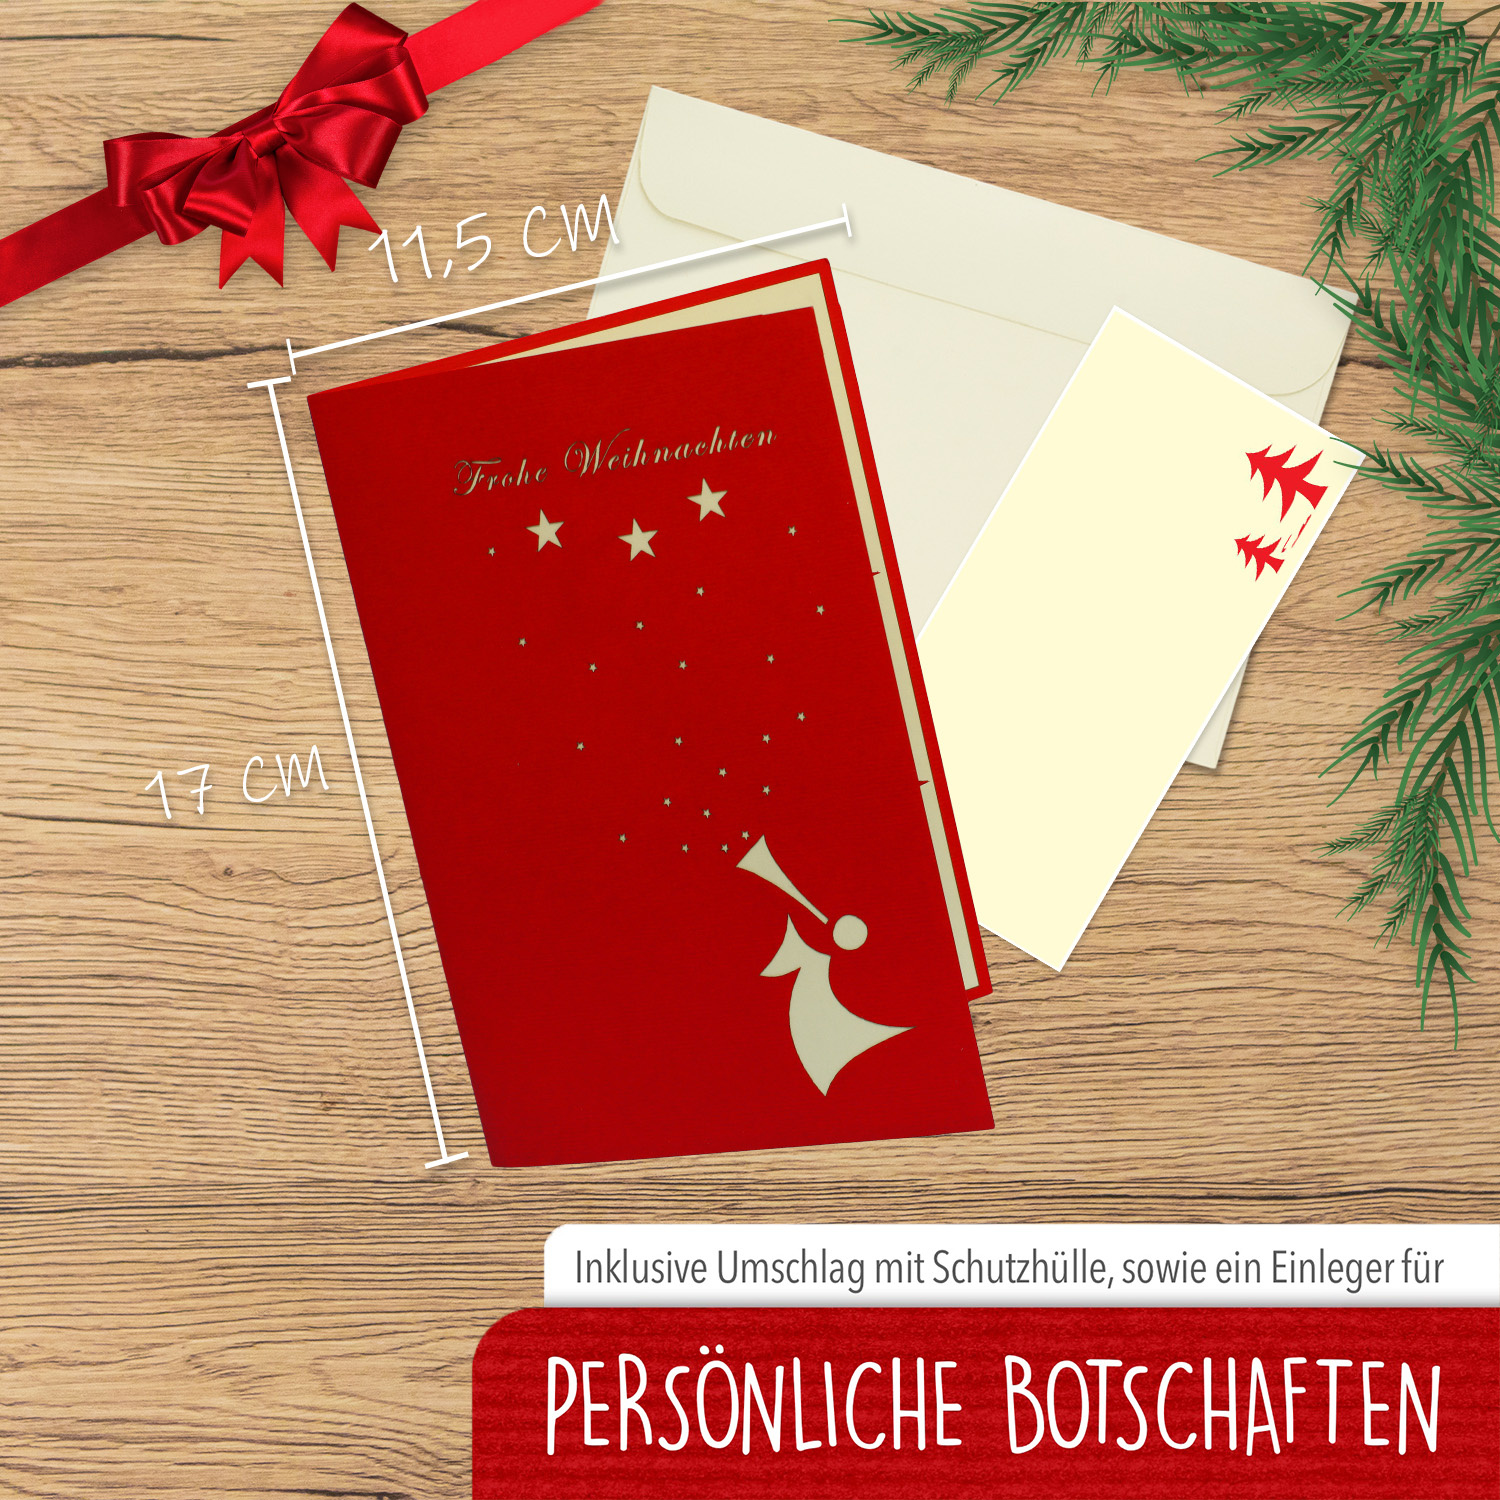 LINPOPUP Pop Up 3D Card, Christmas Card, Greeting Card, Angel Mistletoe, LIN17736, LINPopUp®, N410